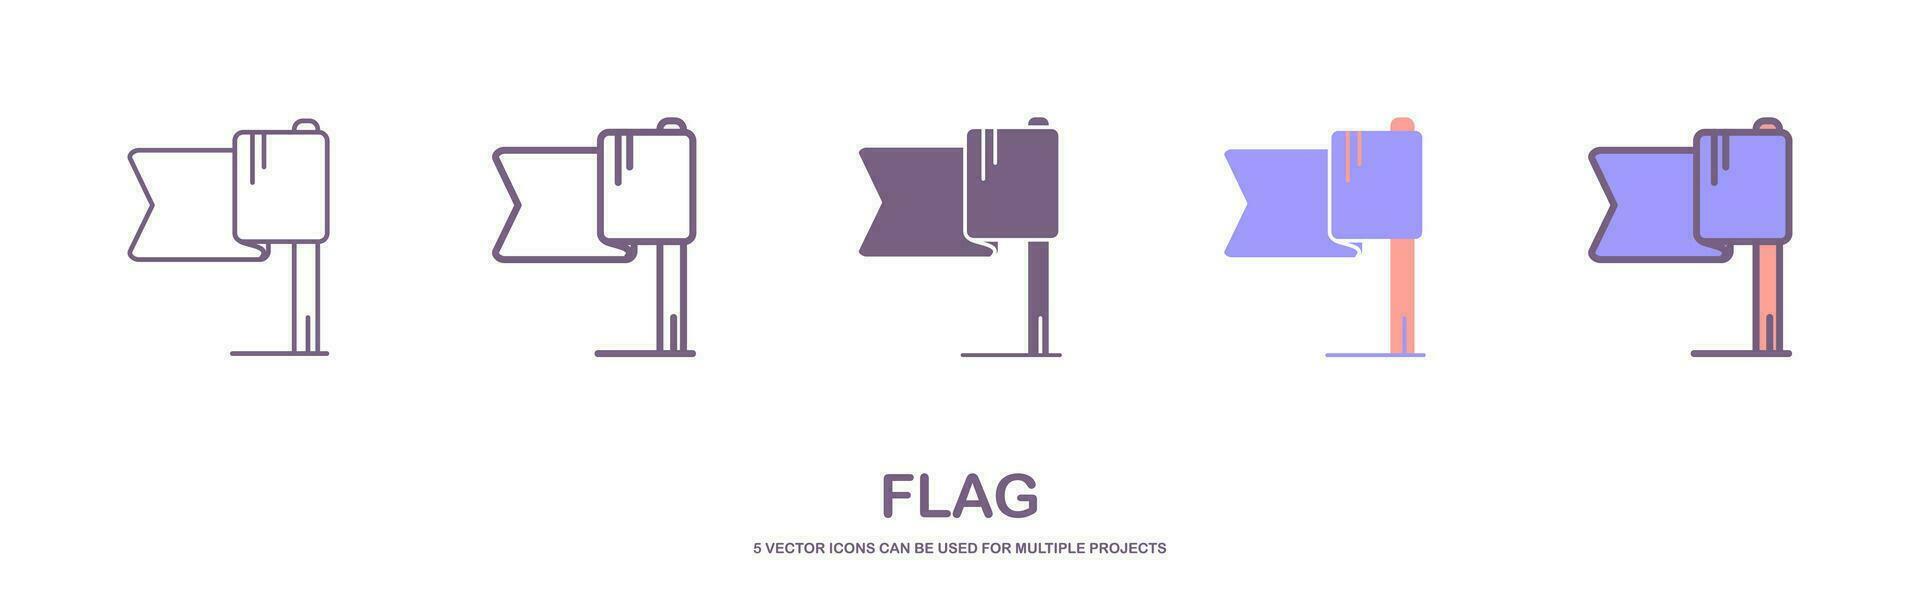 Flag icon isolated on white background, Vector illustration, flag illustration.